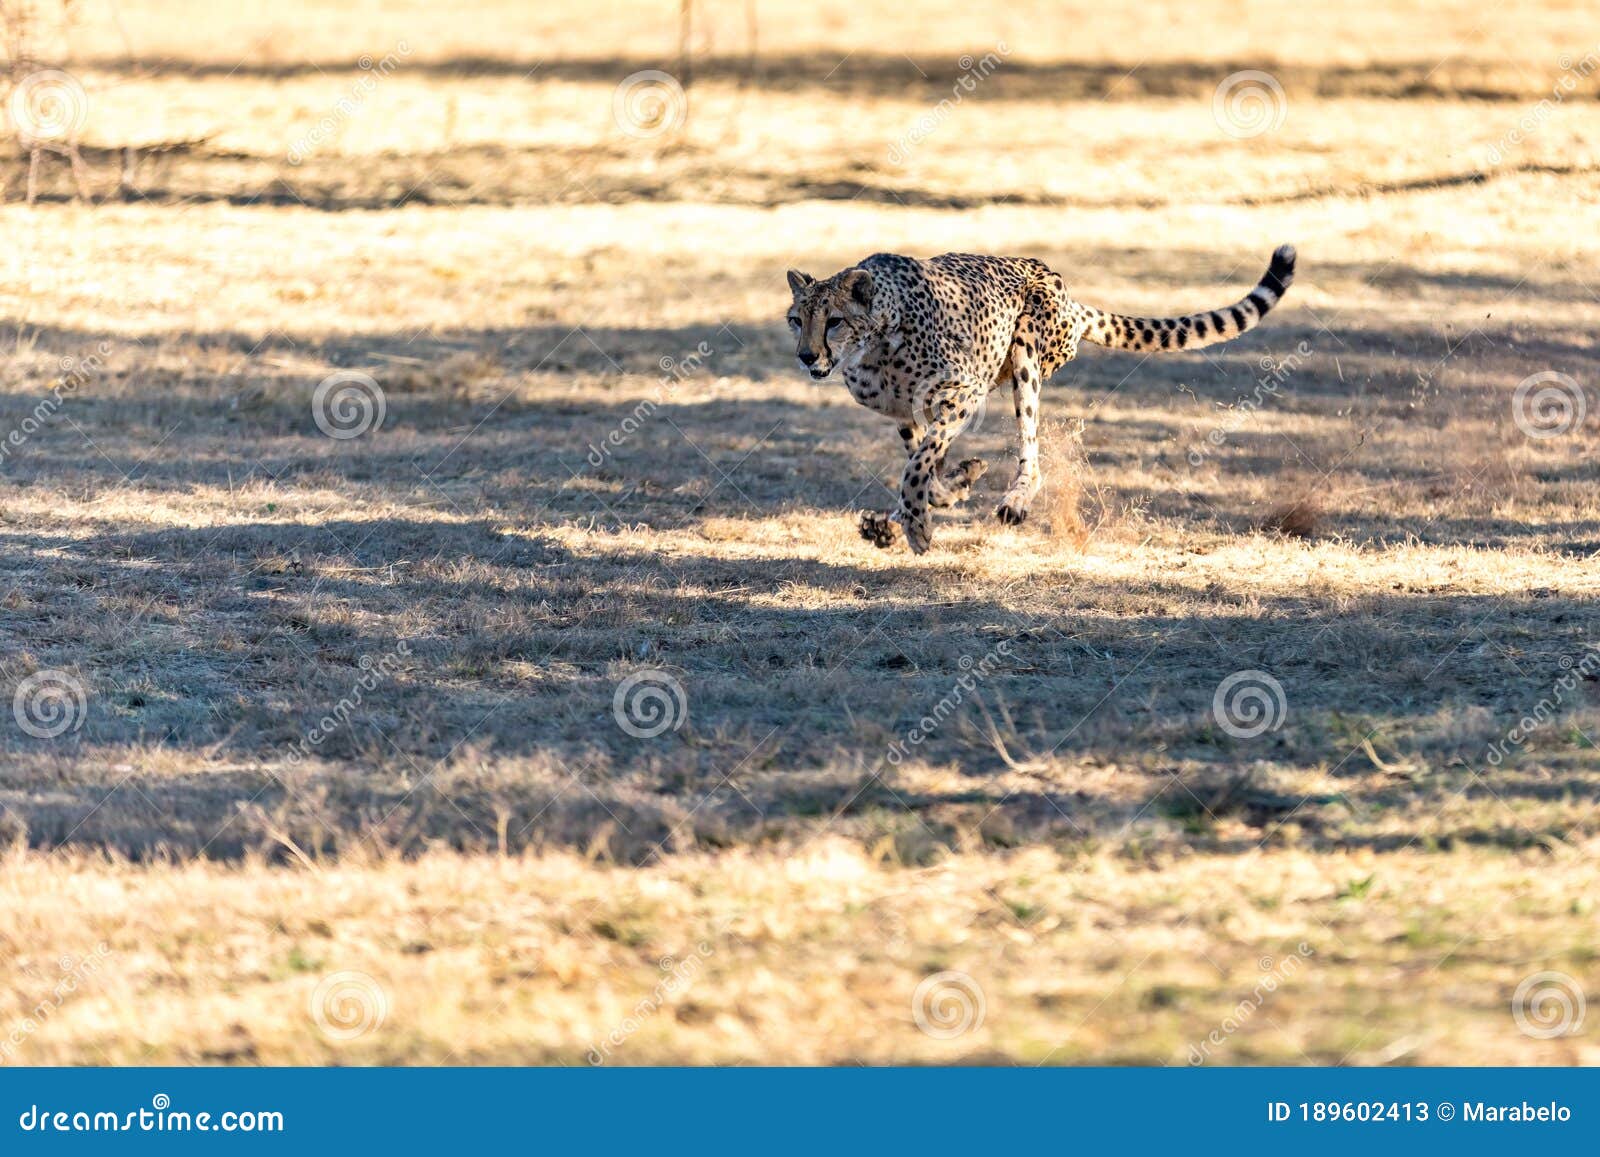 cheetah running in south africa, acinonyx jubatus. guepardo